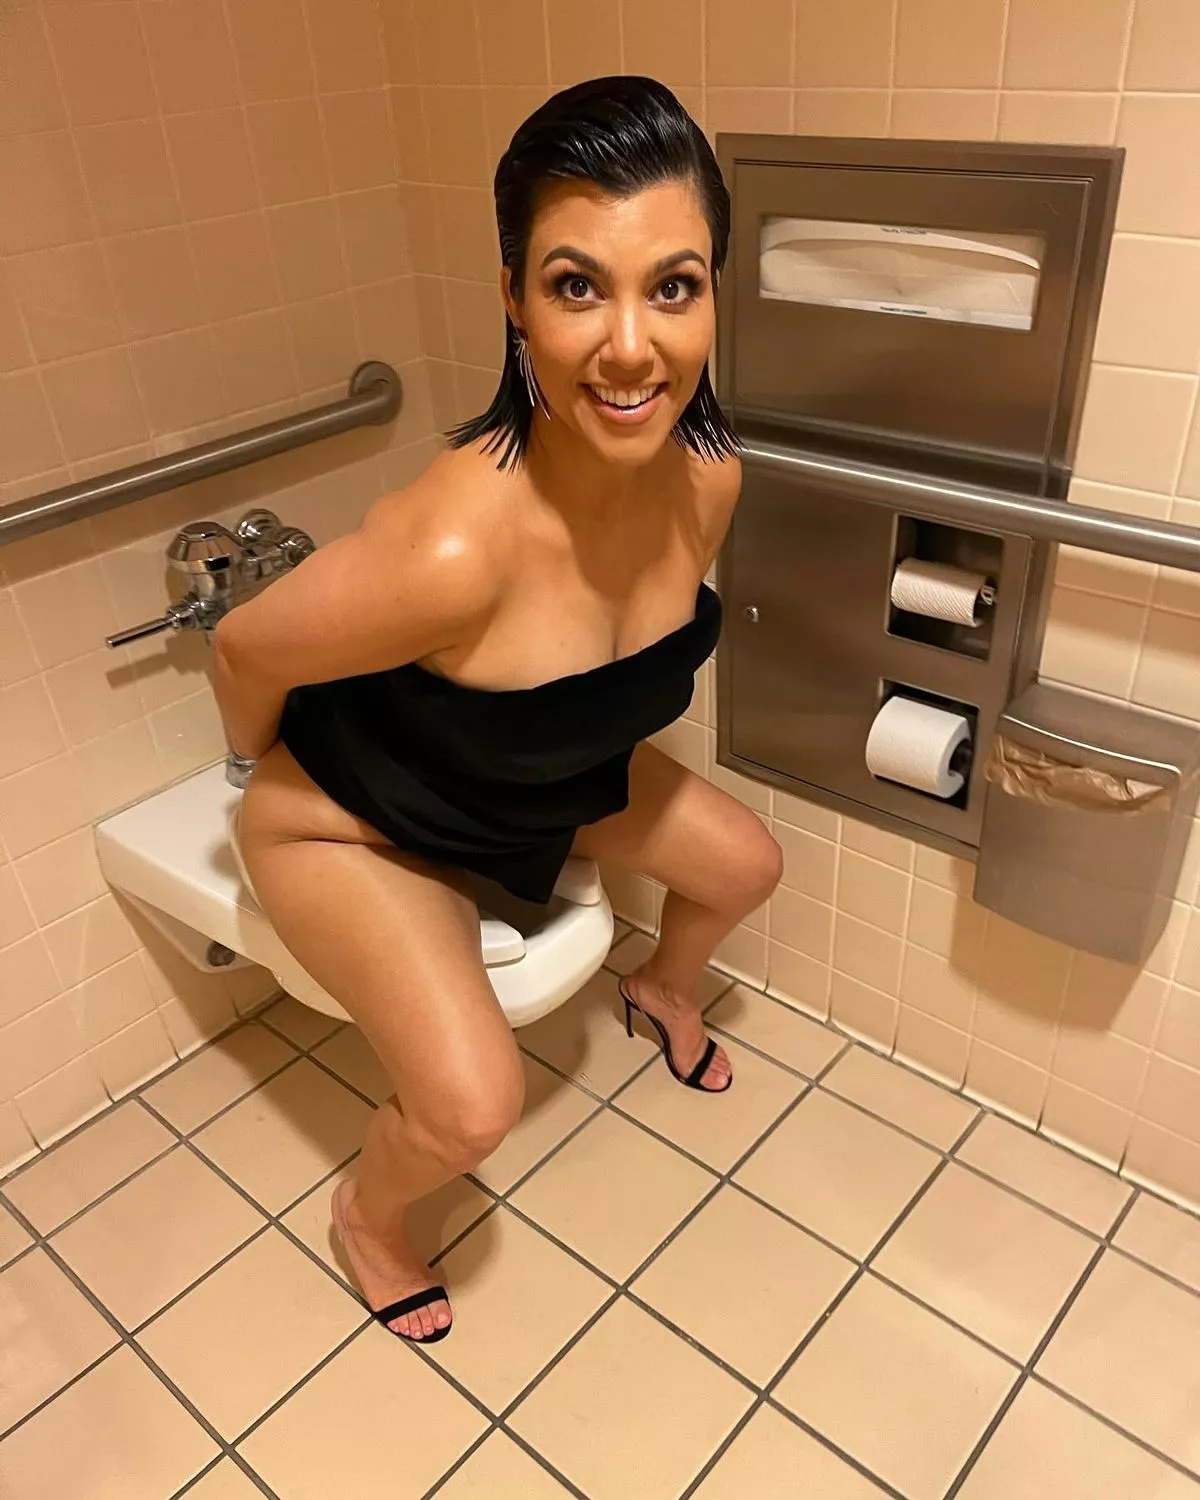 Travis Barker Criticized For Sharing Photo Of Kourtney Kardashian Squatting On Toilet Without Pants